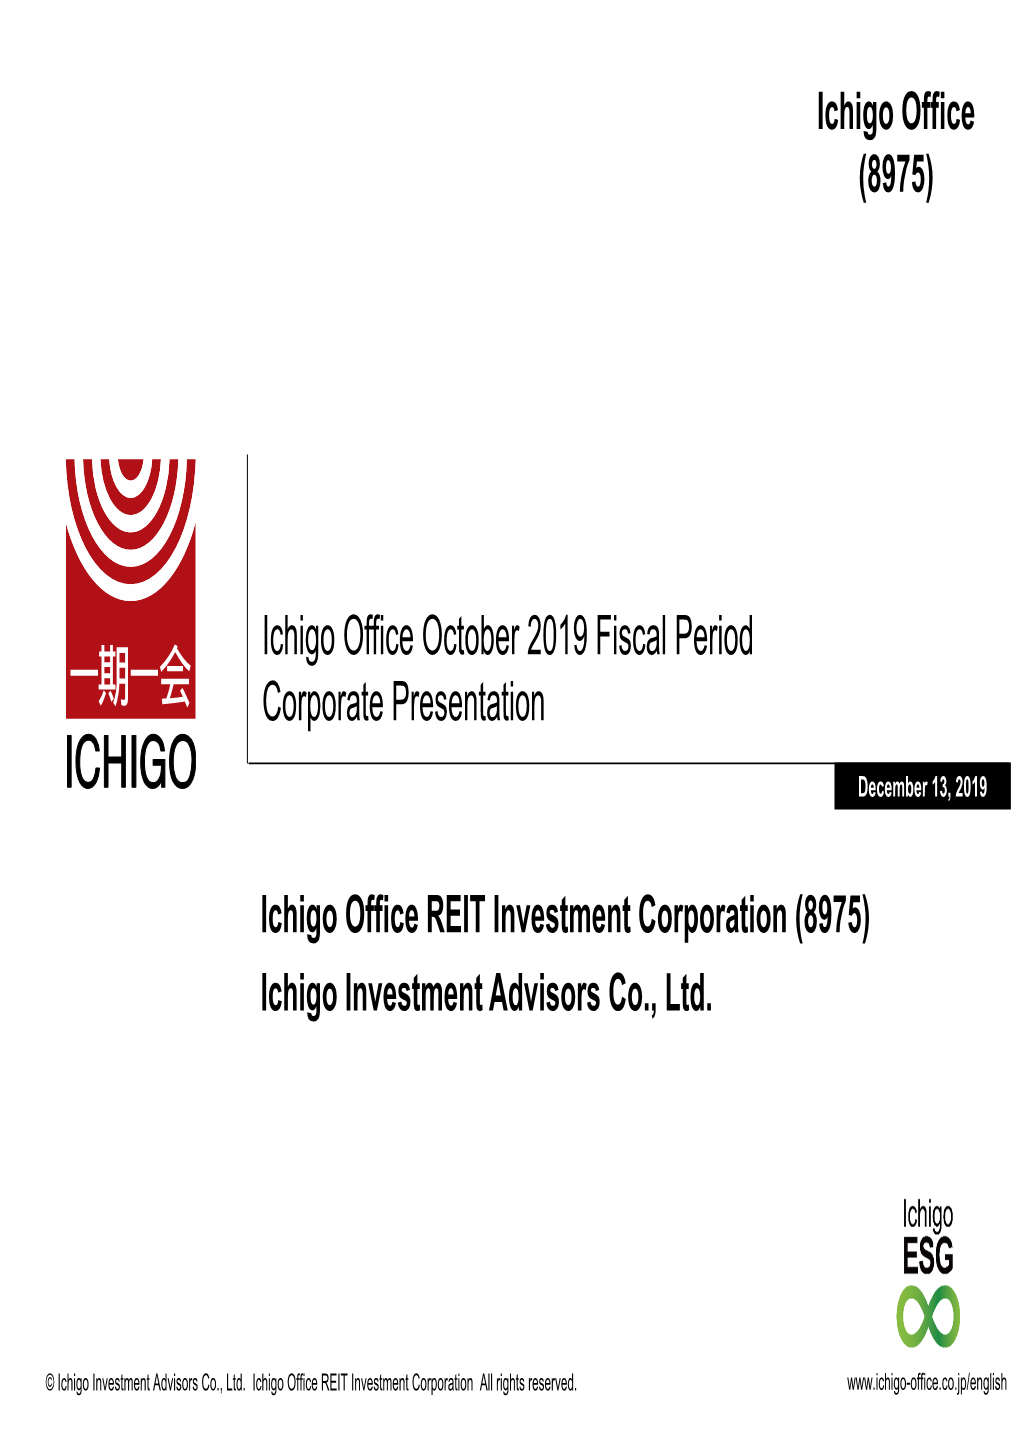 Ichigo Office October 2019 Fiscal Period Corporate Presentation